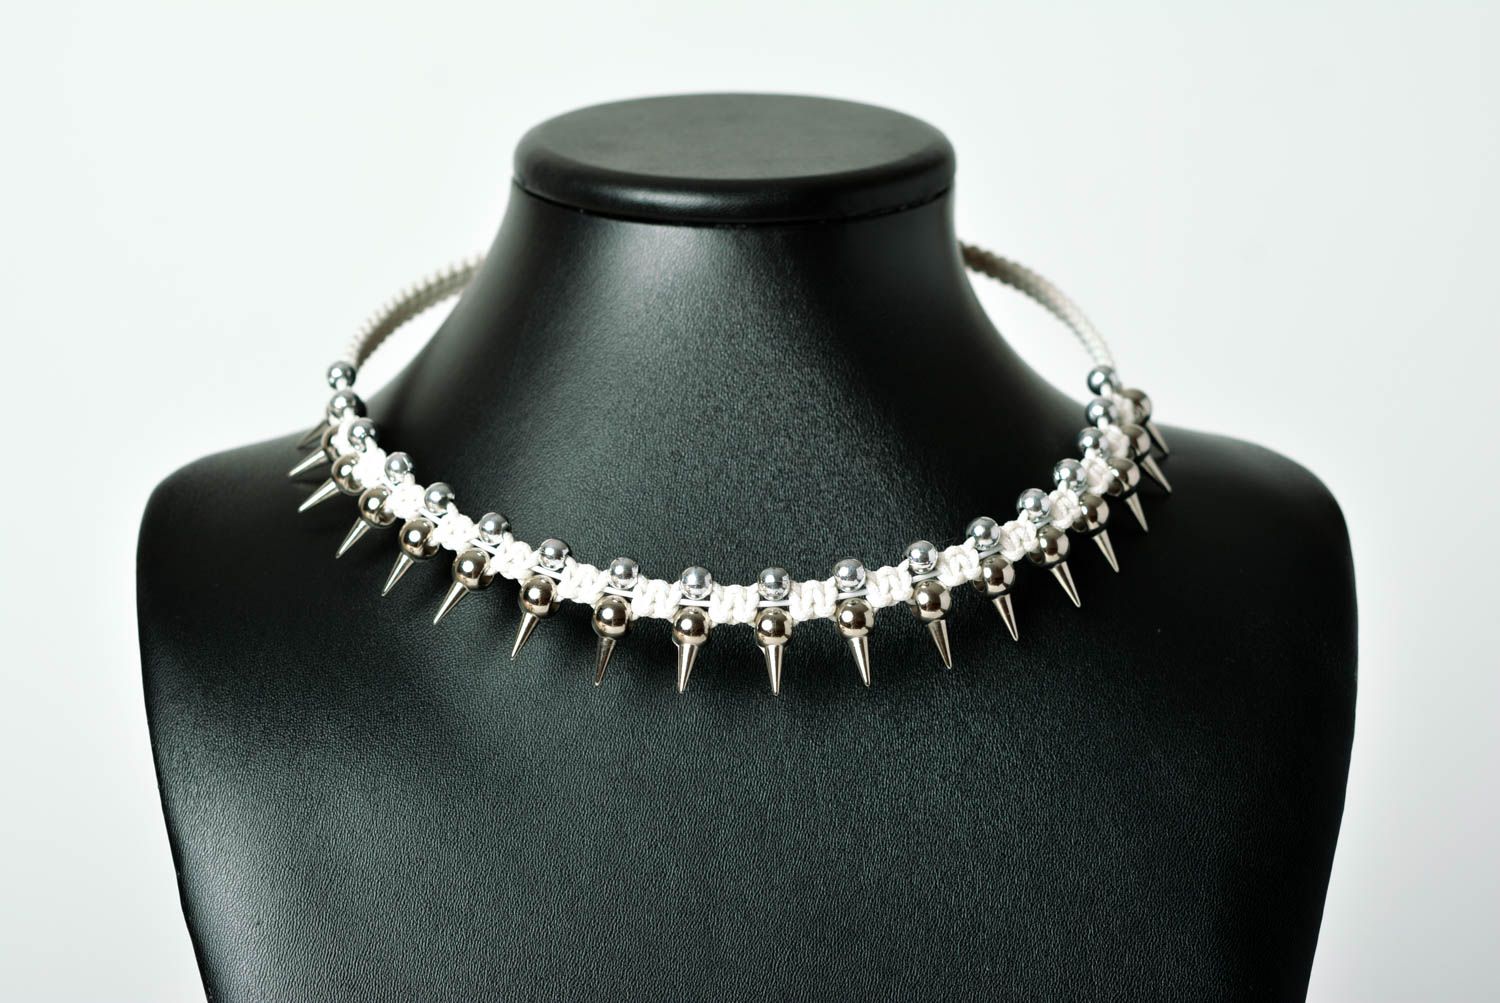 Spike necklace handmade necklace macrame necklace handmade elegant jewelry  photo 2